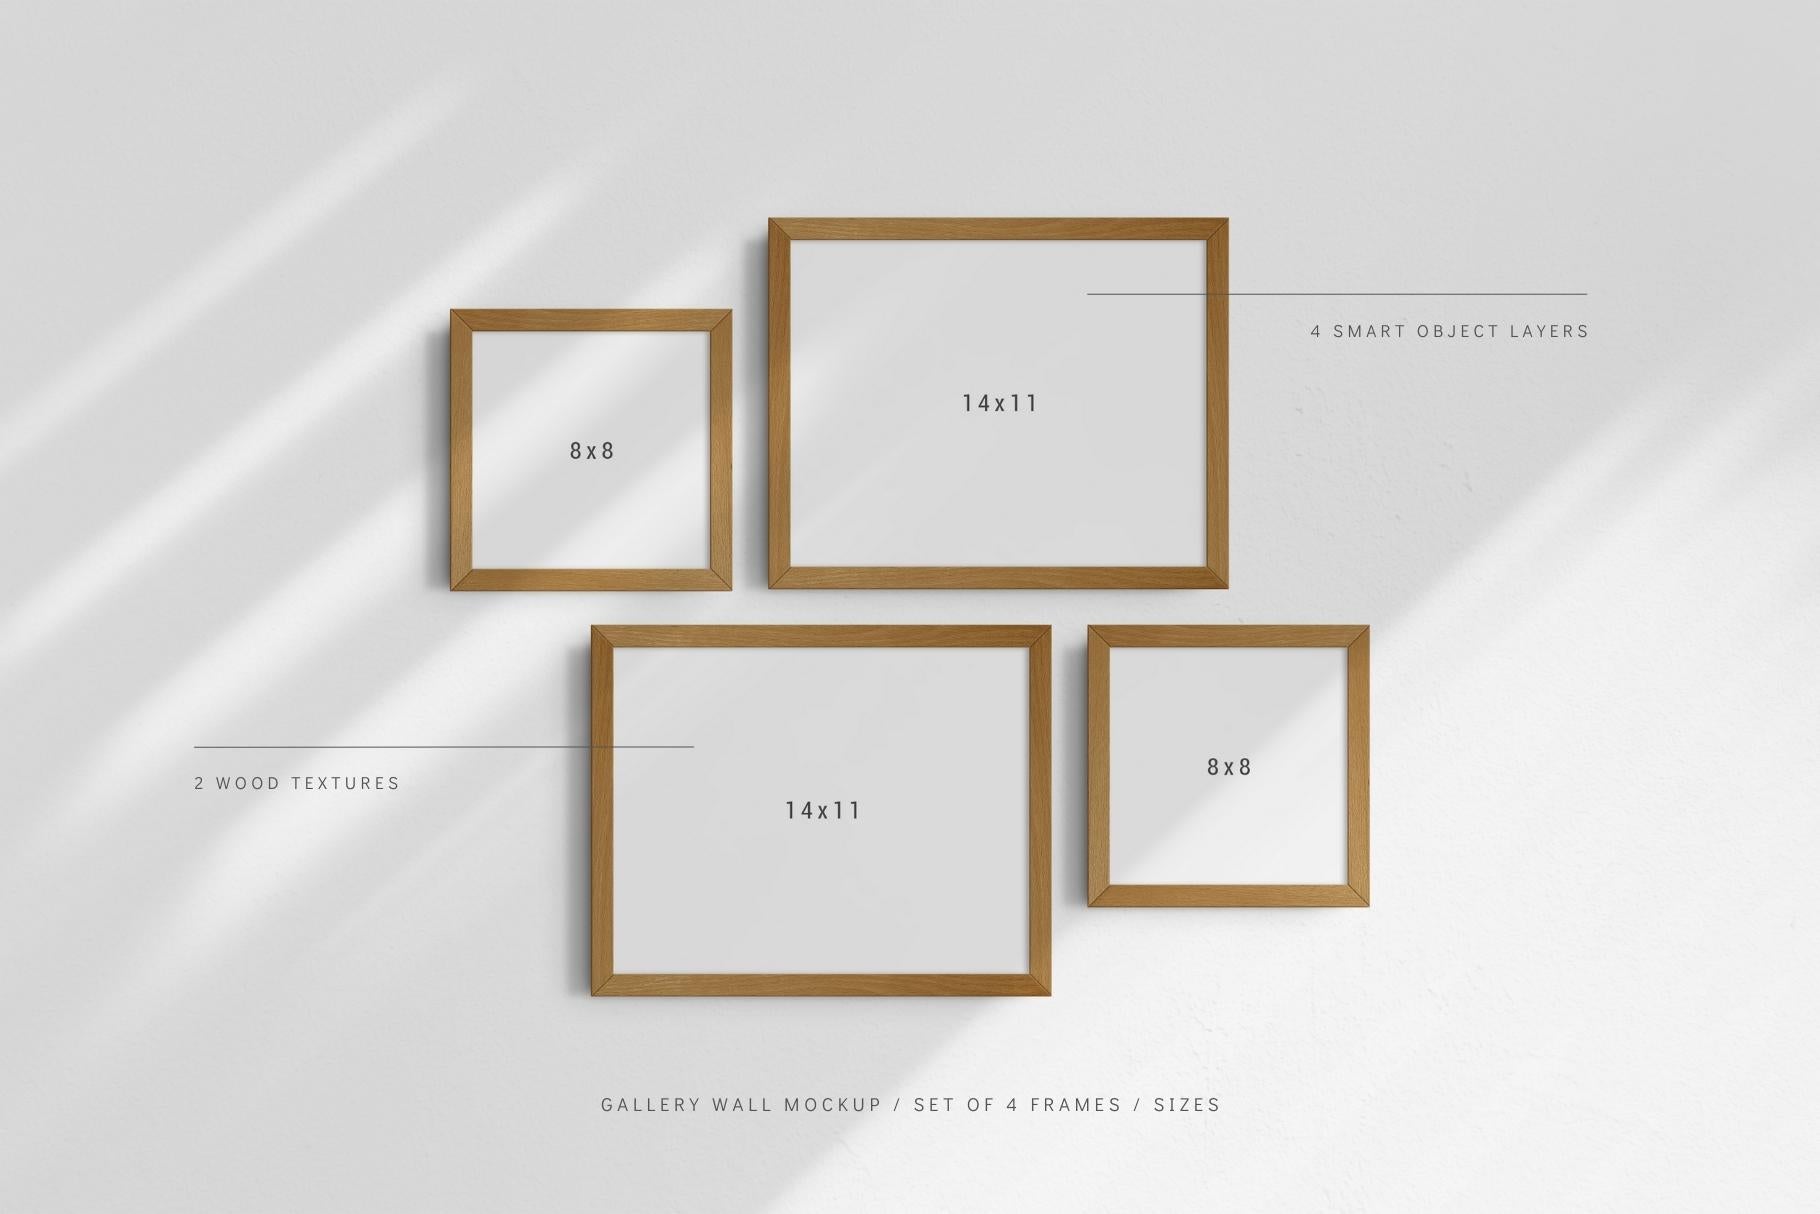 Gallery Wall Mockup | Set of 4 Frames | Frame Mockup | PSD | Sizes